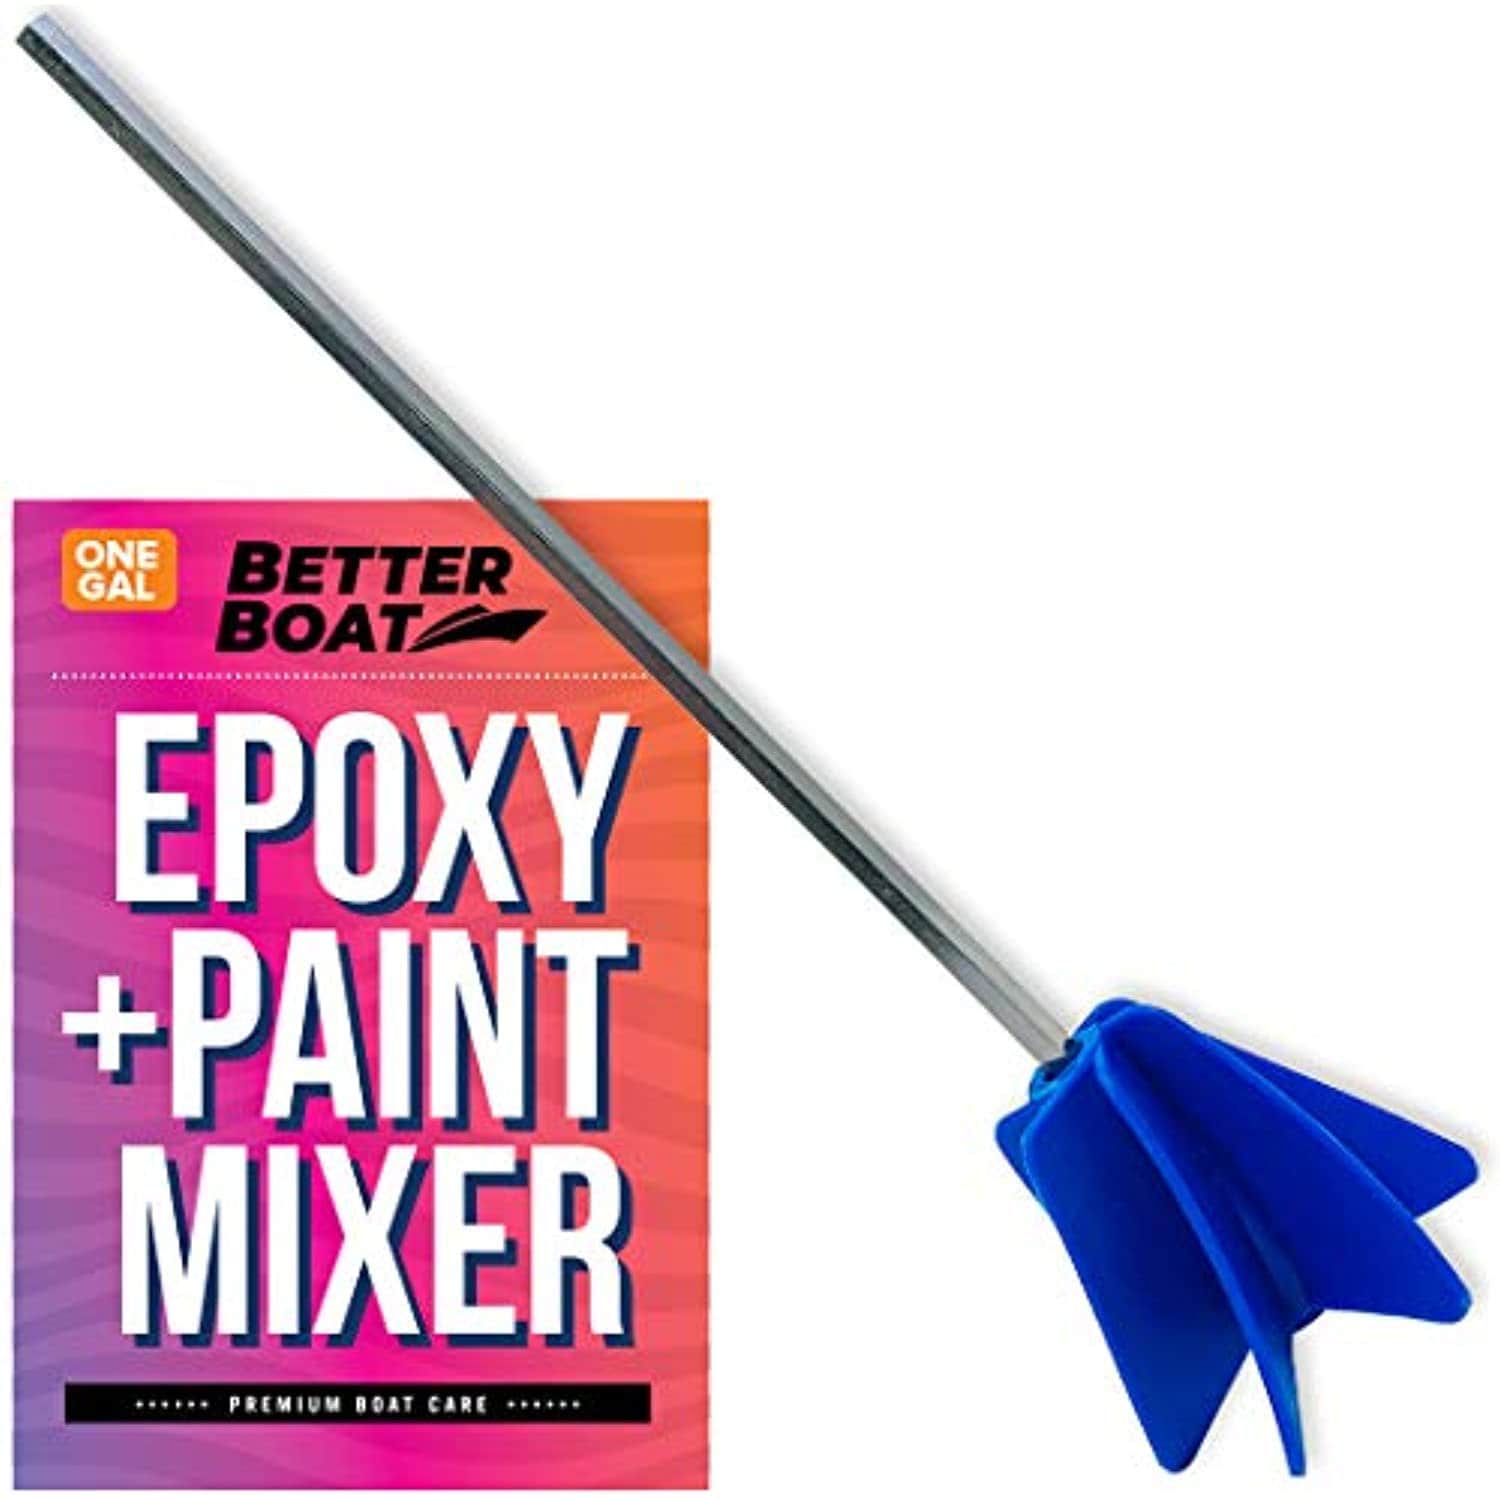 Pixiss Premium Resin Mixer, Handheld Rechargeable Epoxy Mixer 6